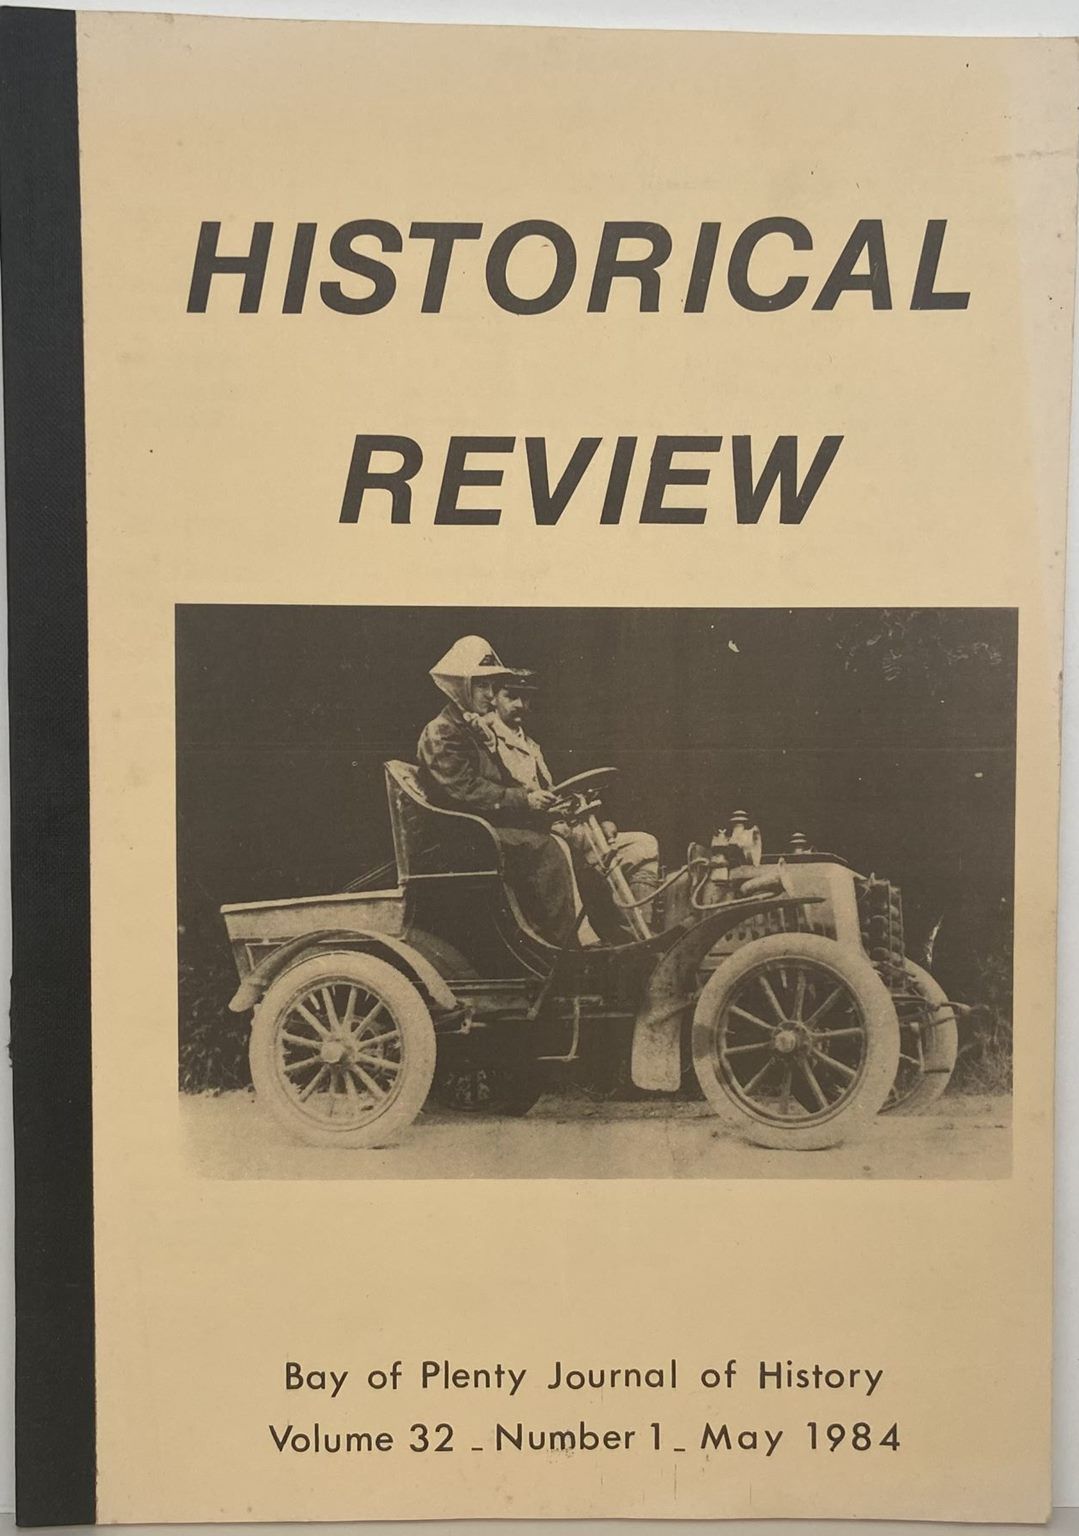 HISTORICAL REVIEW: Bay of Plenty Journal of History - Vol. 32, No. 1 - May 1984